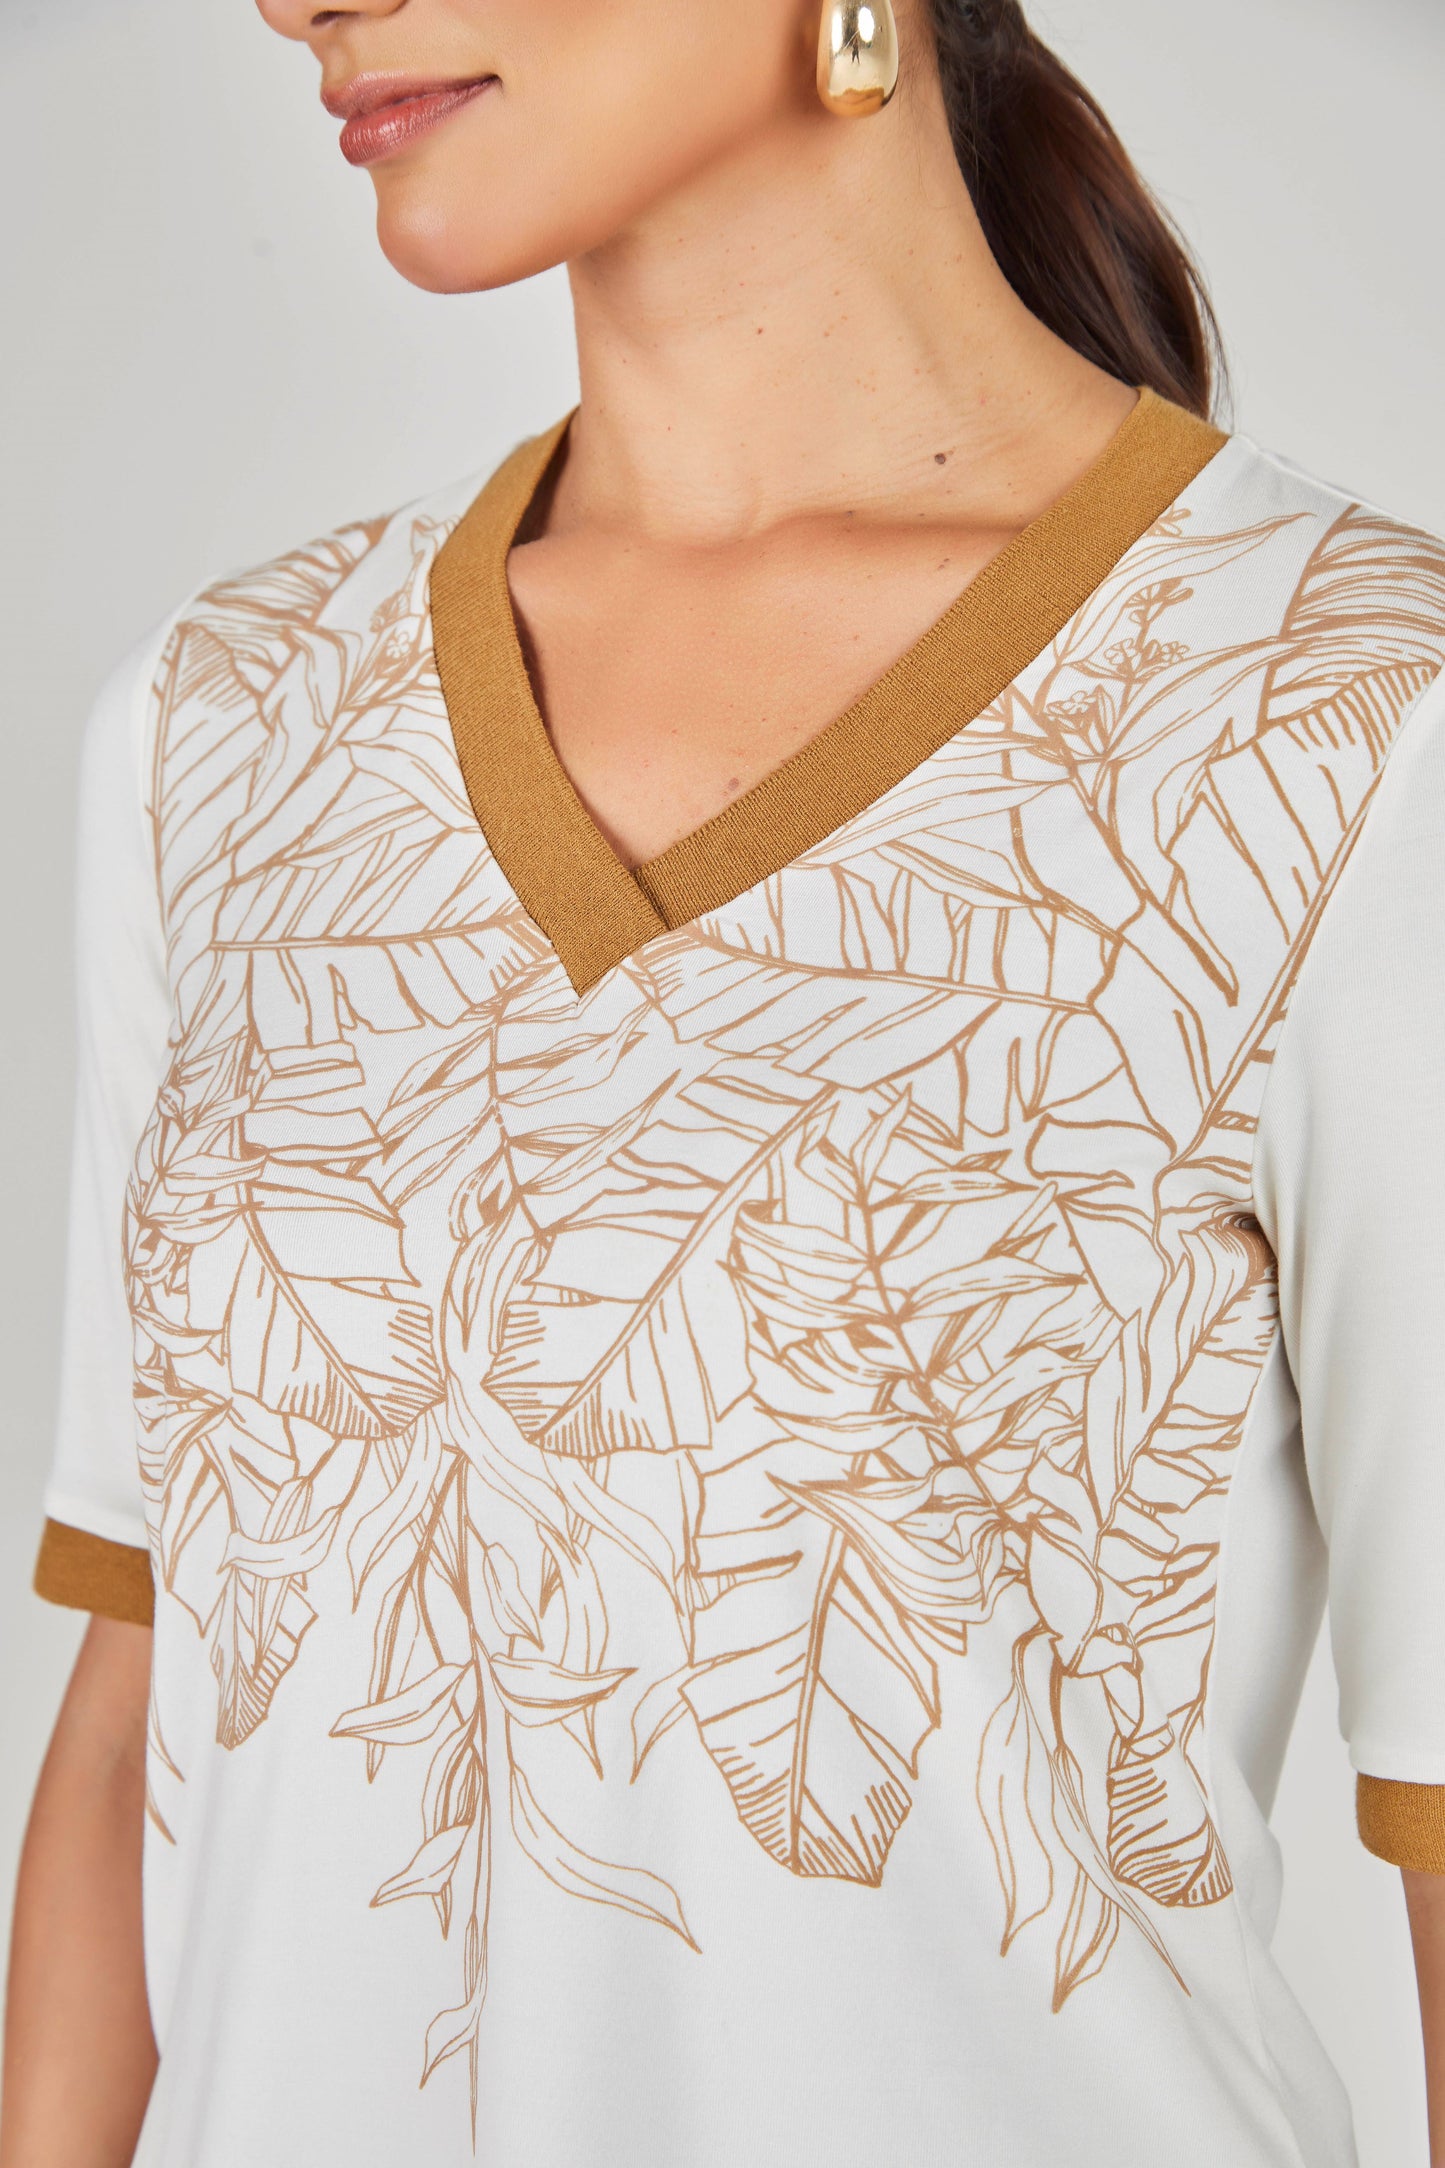 t-shirt malha manga curta estampada com tricot